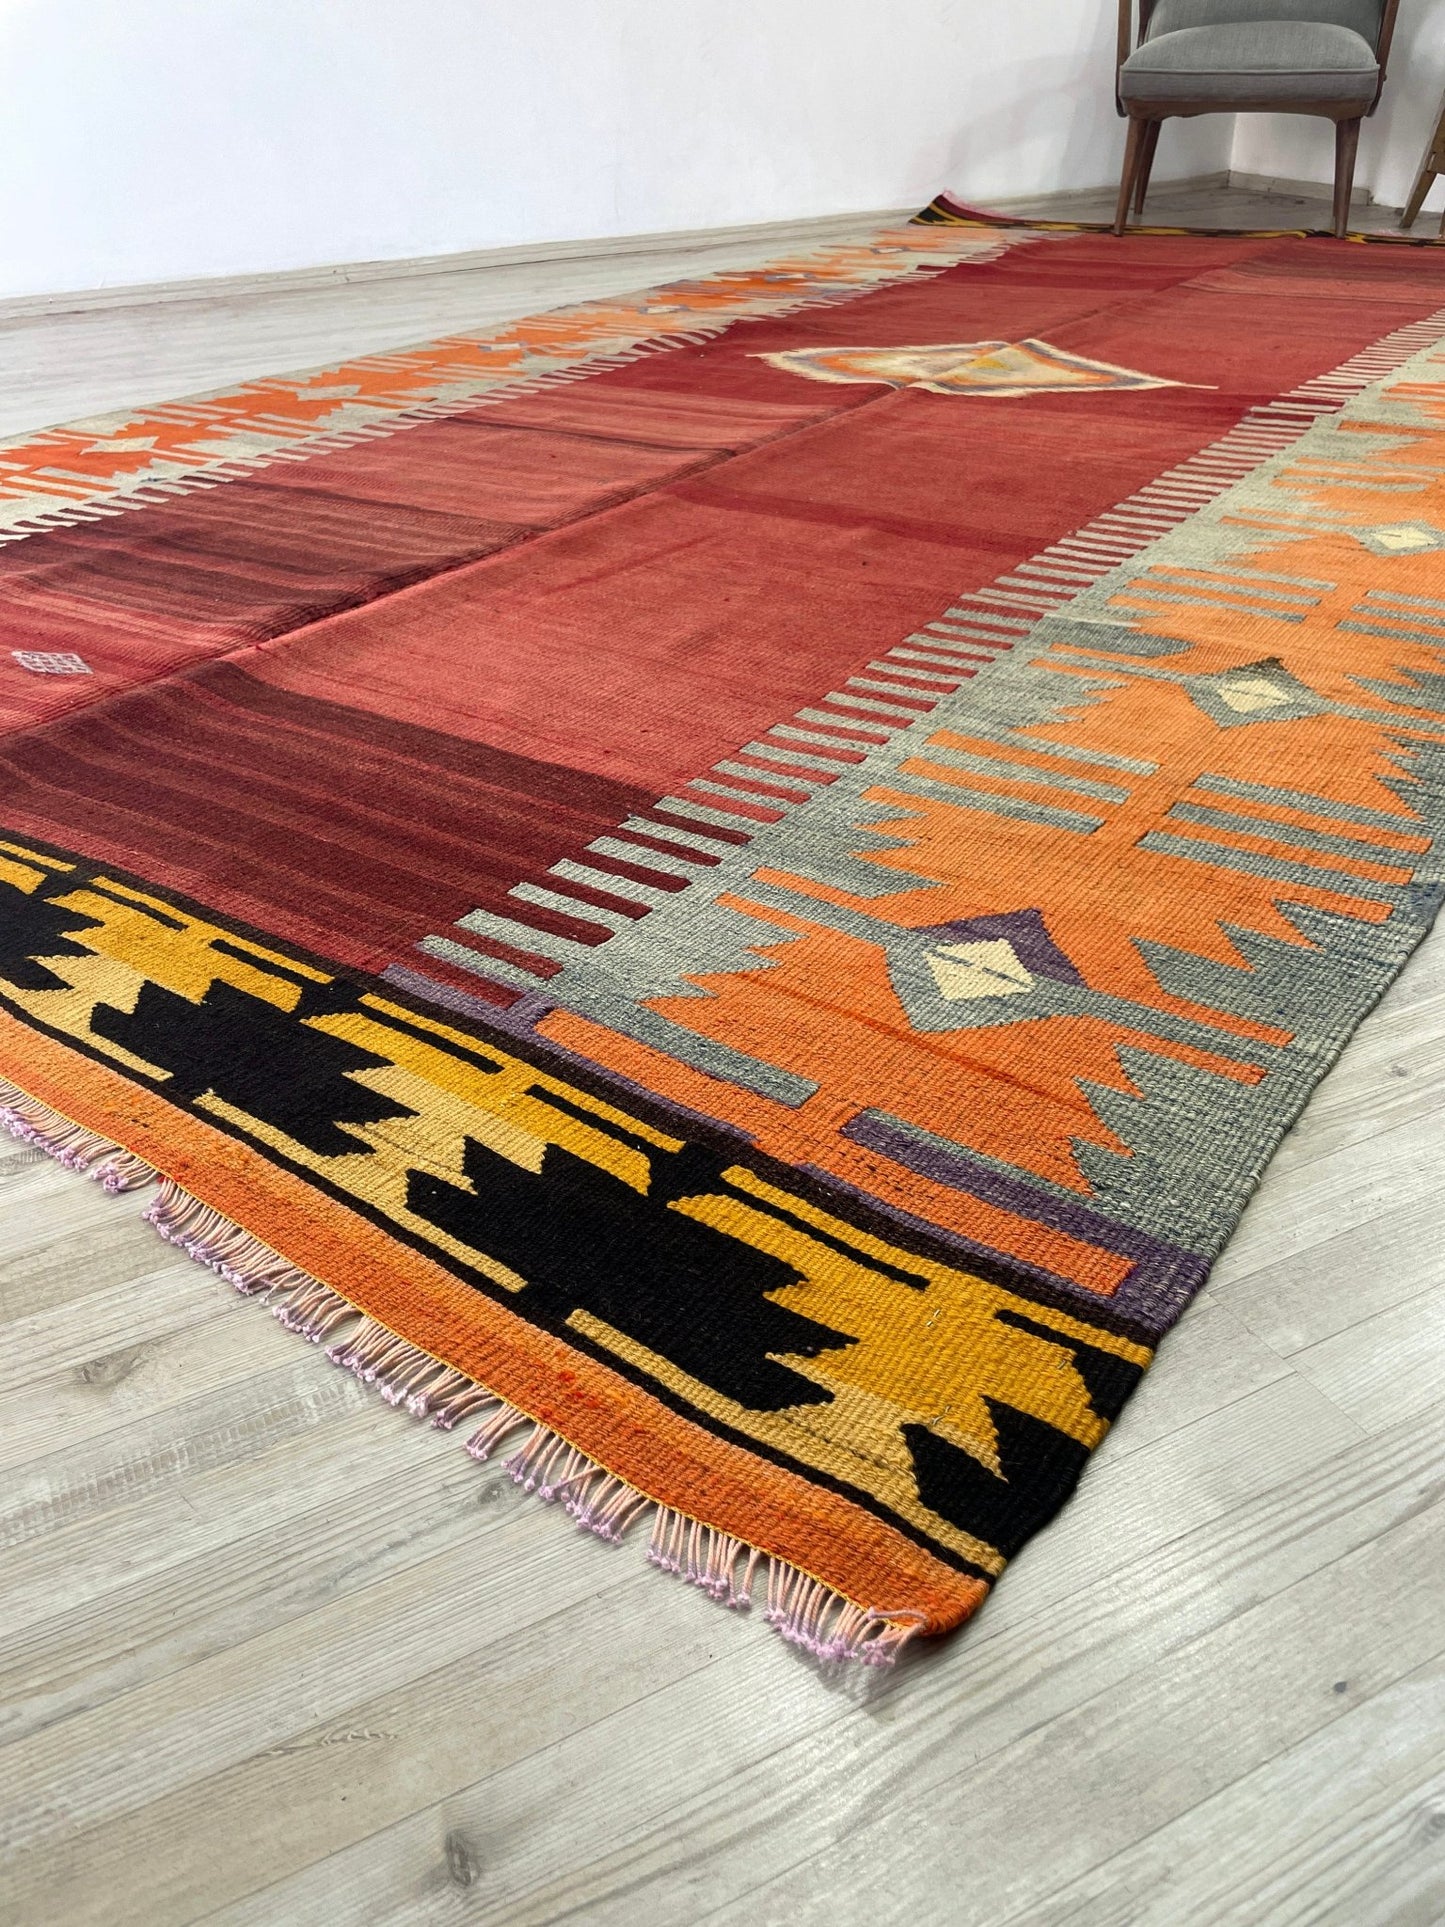 rug shop san francisco mut kilim turkish rug shop online bay area palo alto berkeley